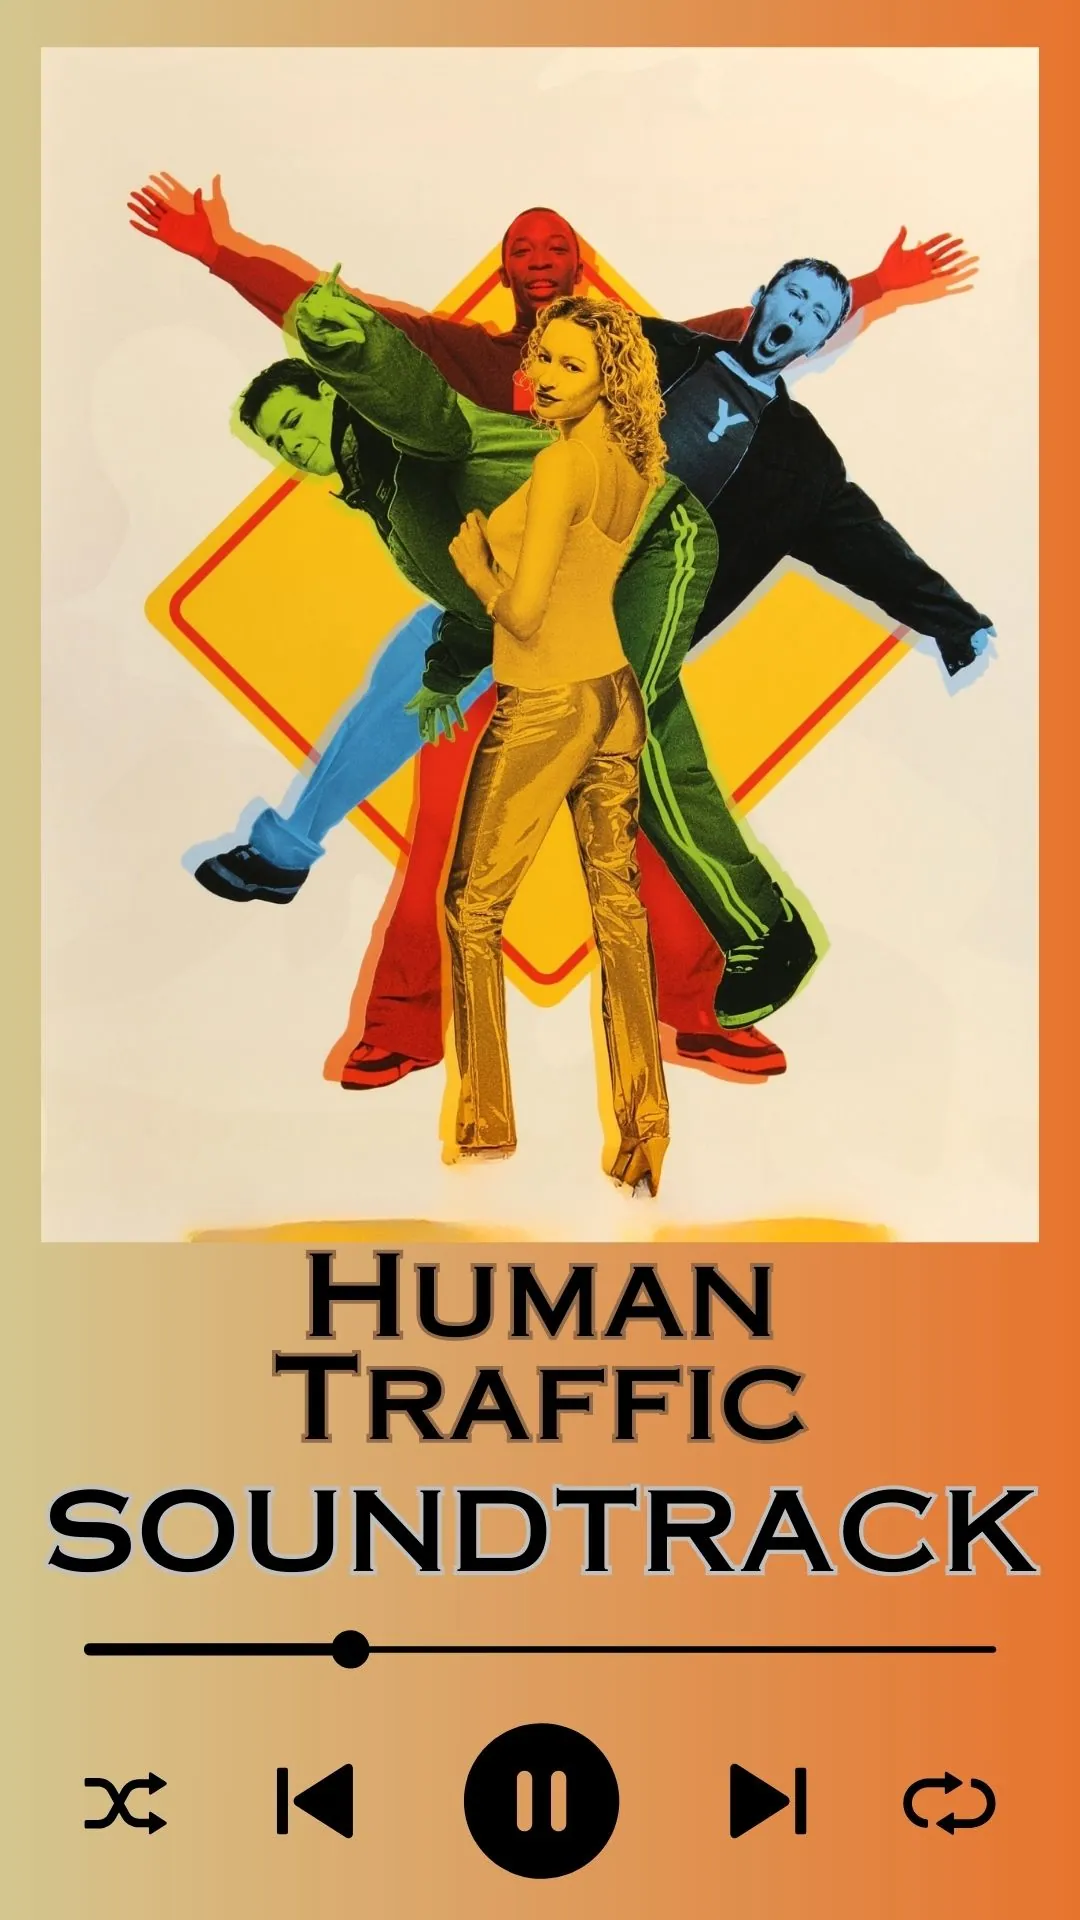 Human Traffic Soundtrack